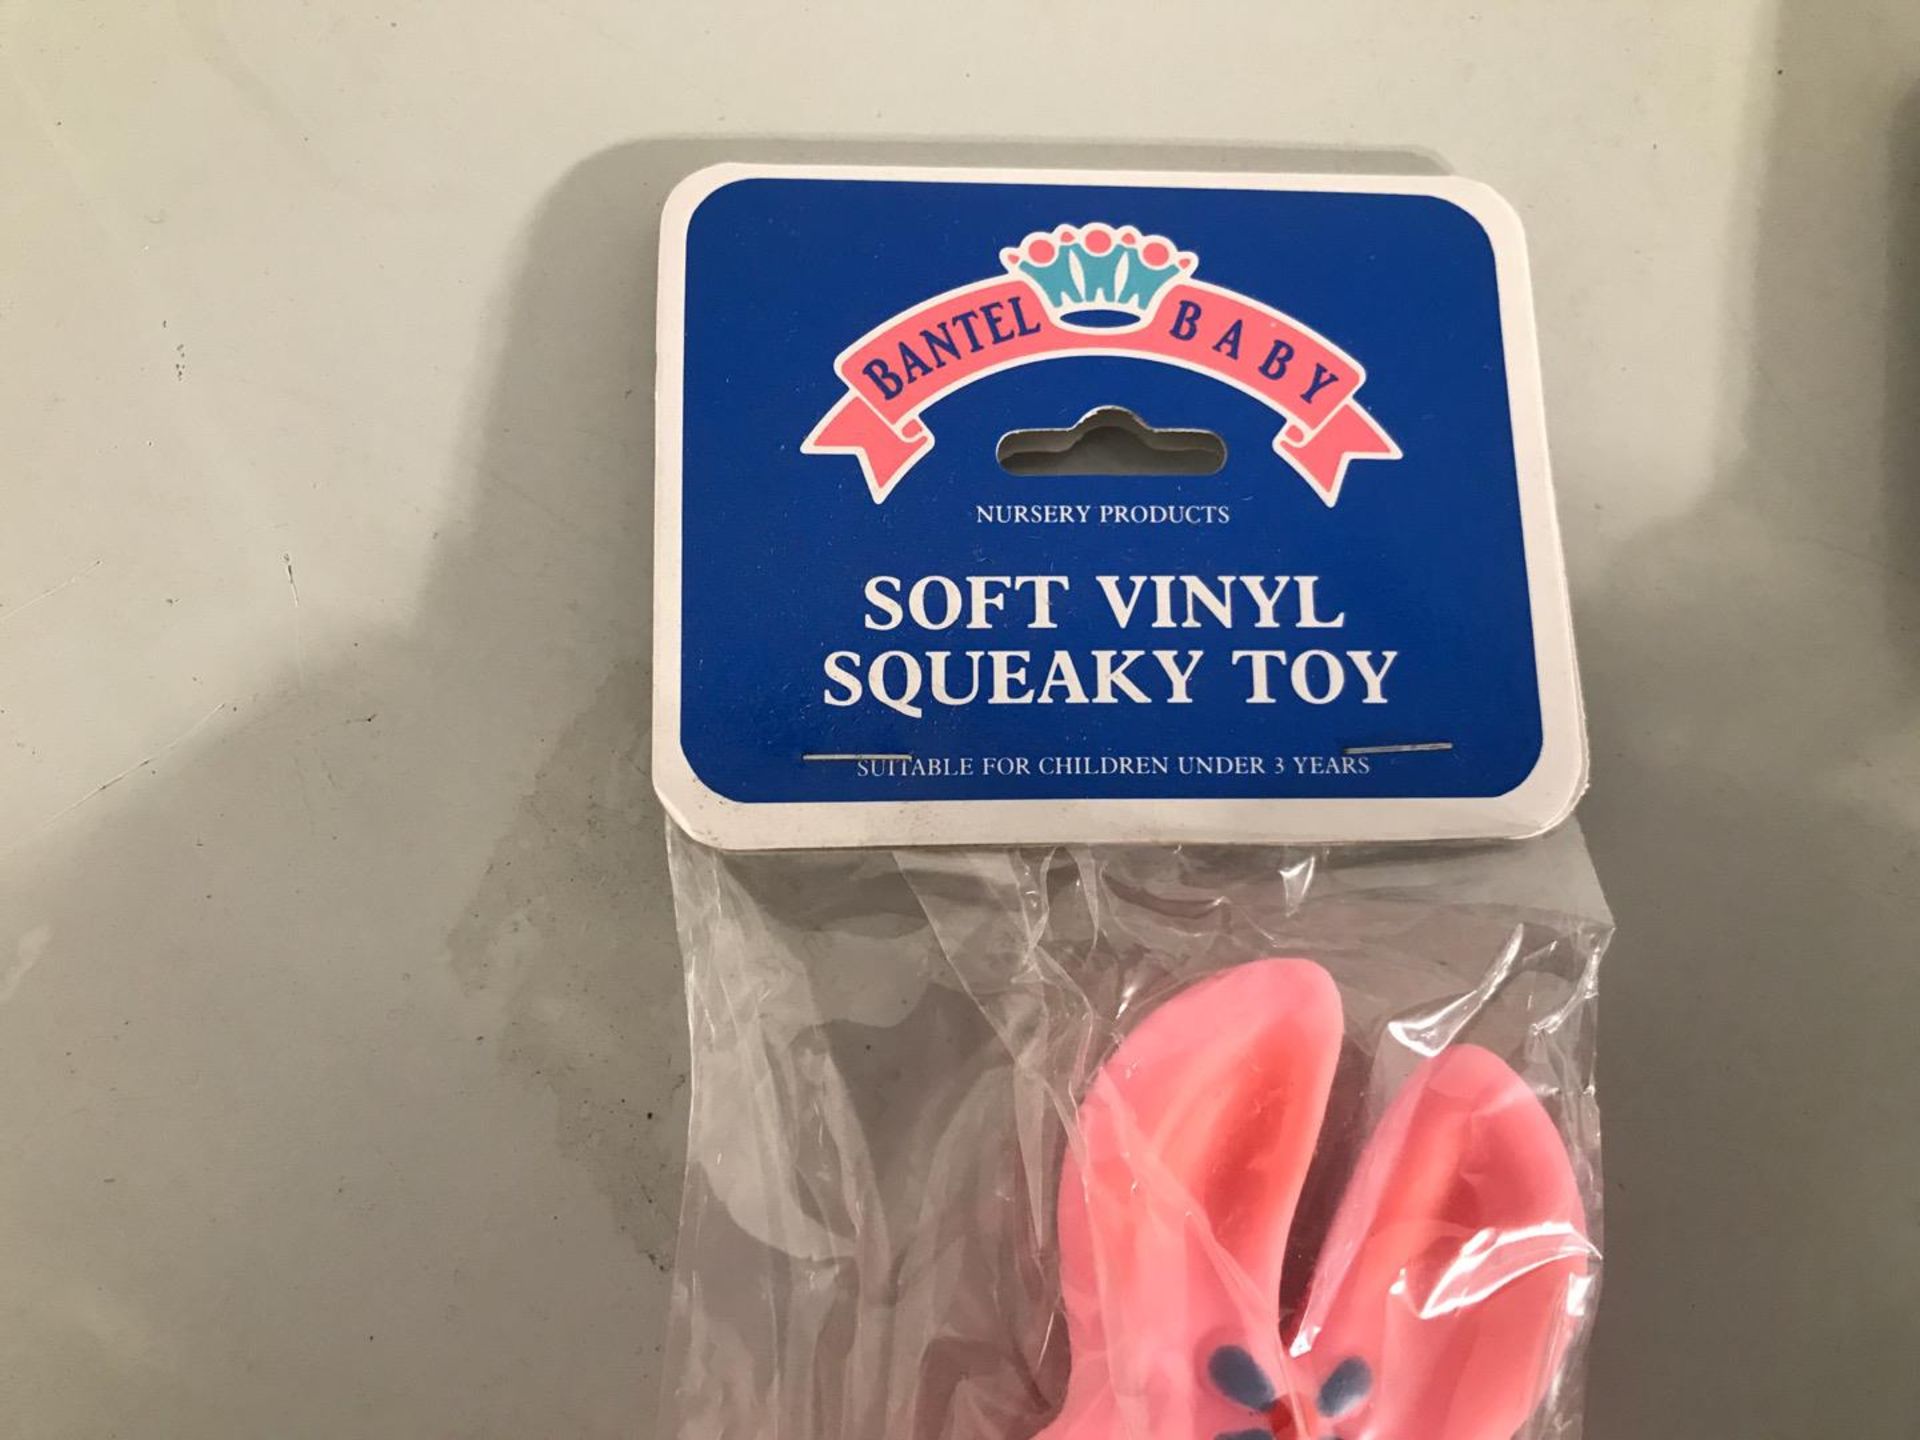 Soft vinyl squeaky toy - Image 2 of 2